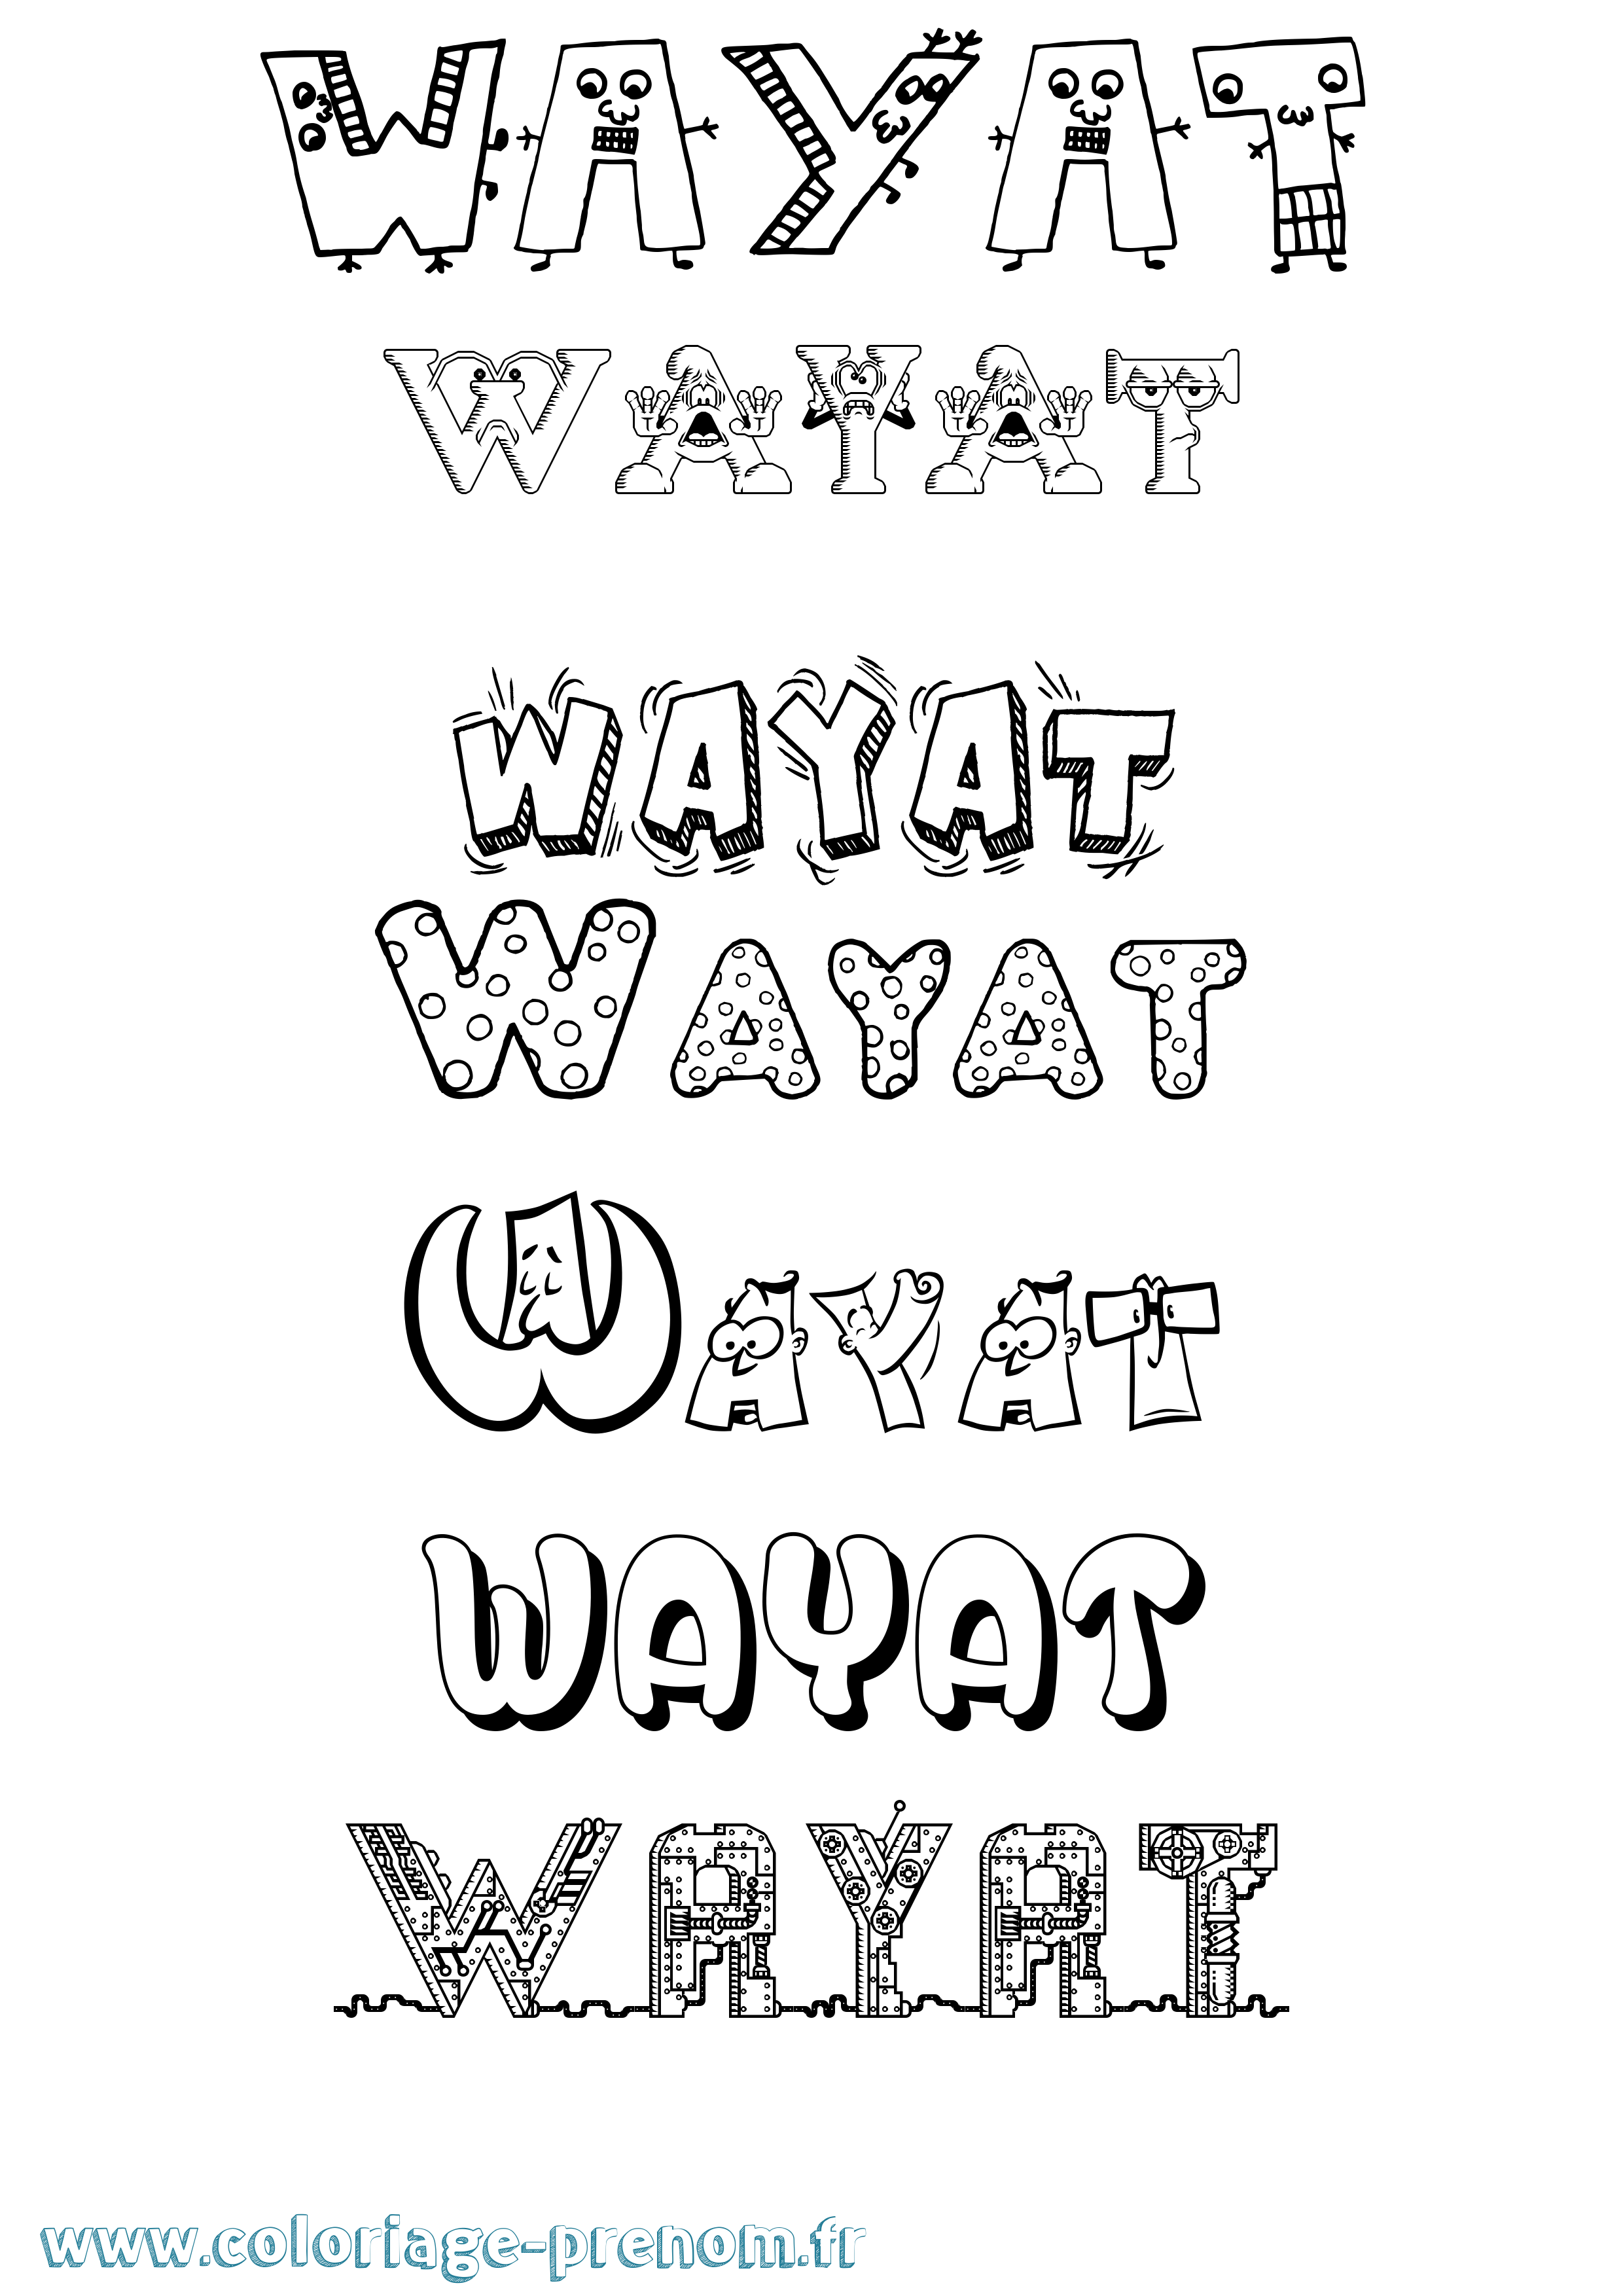 Coloriage prénom Wayat Fun